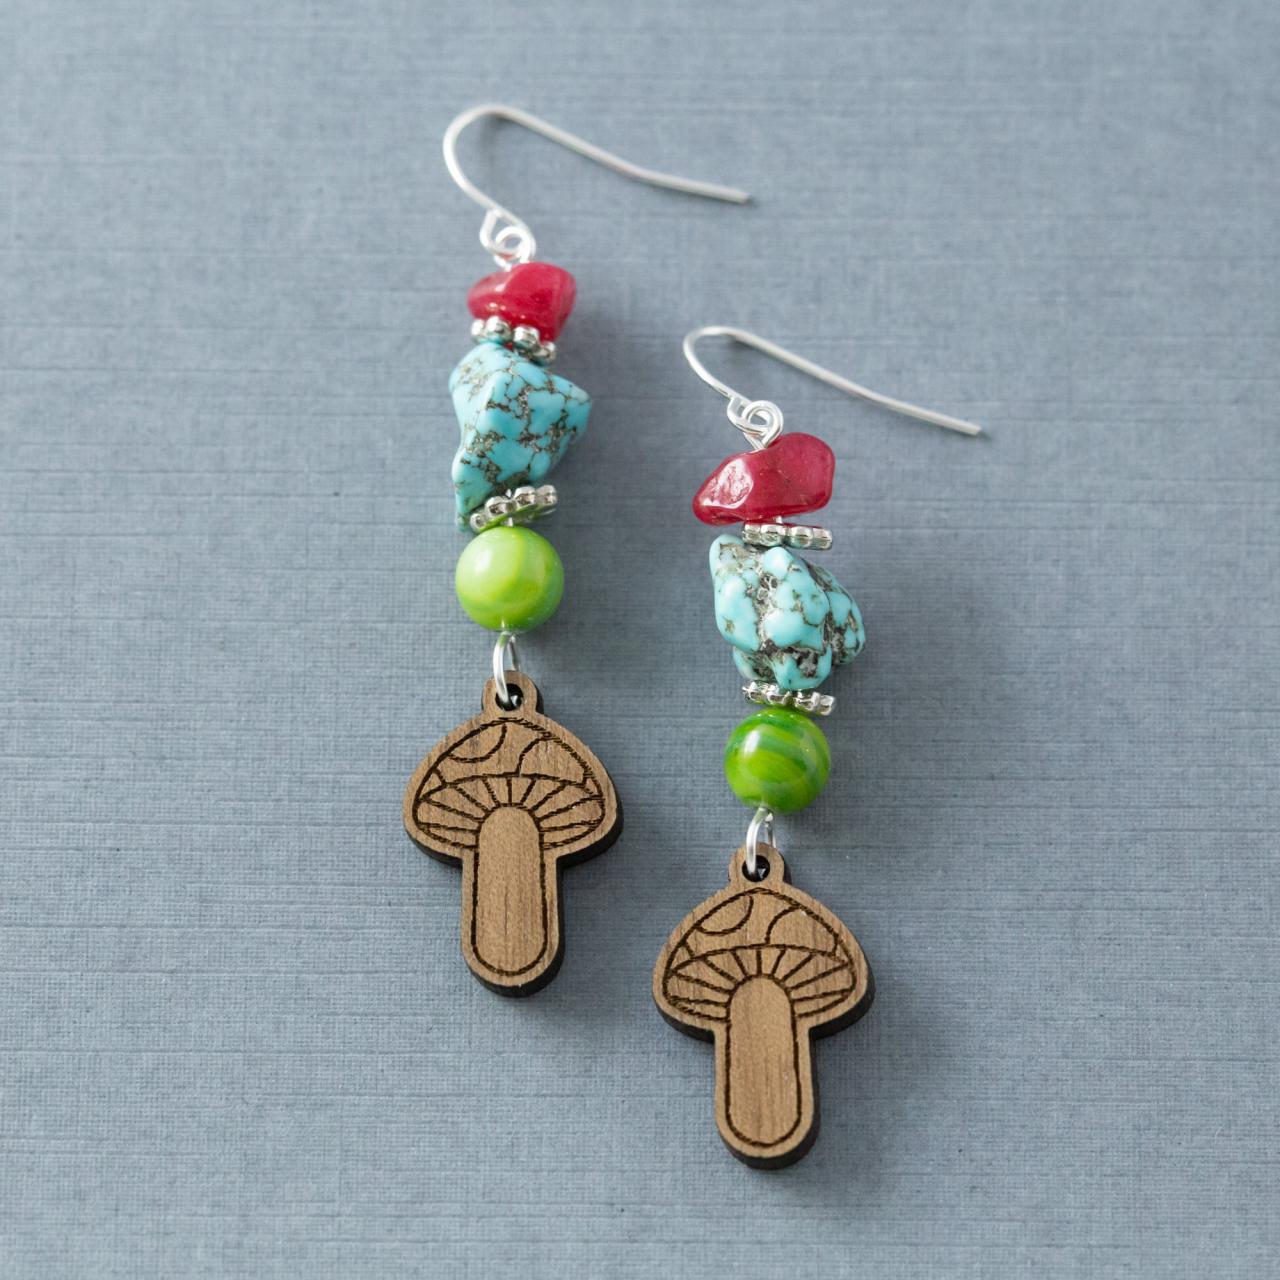 Long Mushroom Earrings, Colorful Hippie Earrings, Nature Earrings, Forest Earrings, Woodland Earrings, Wood Mushroom Jewelry